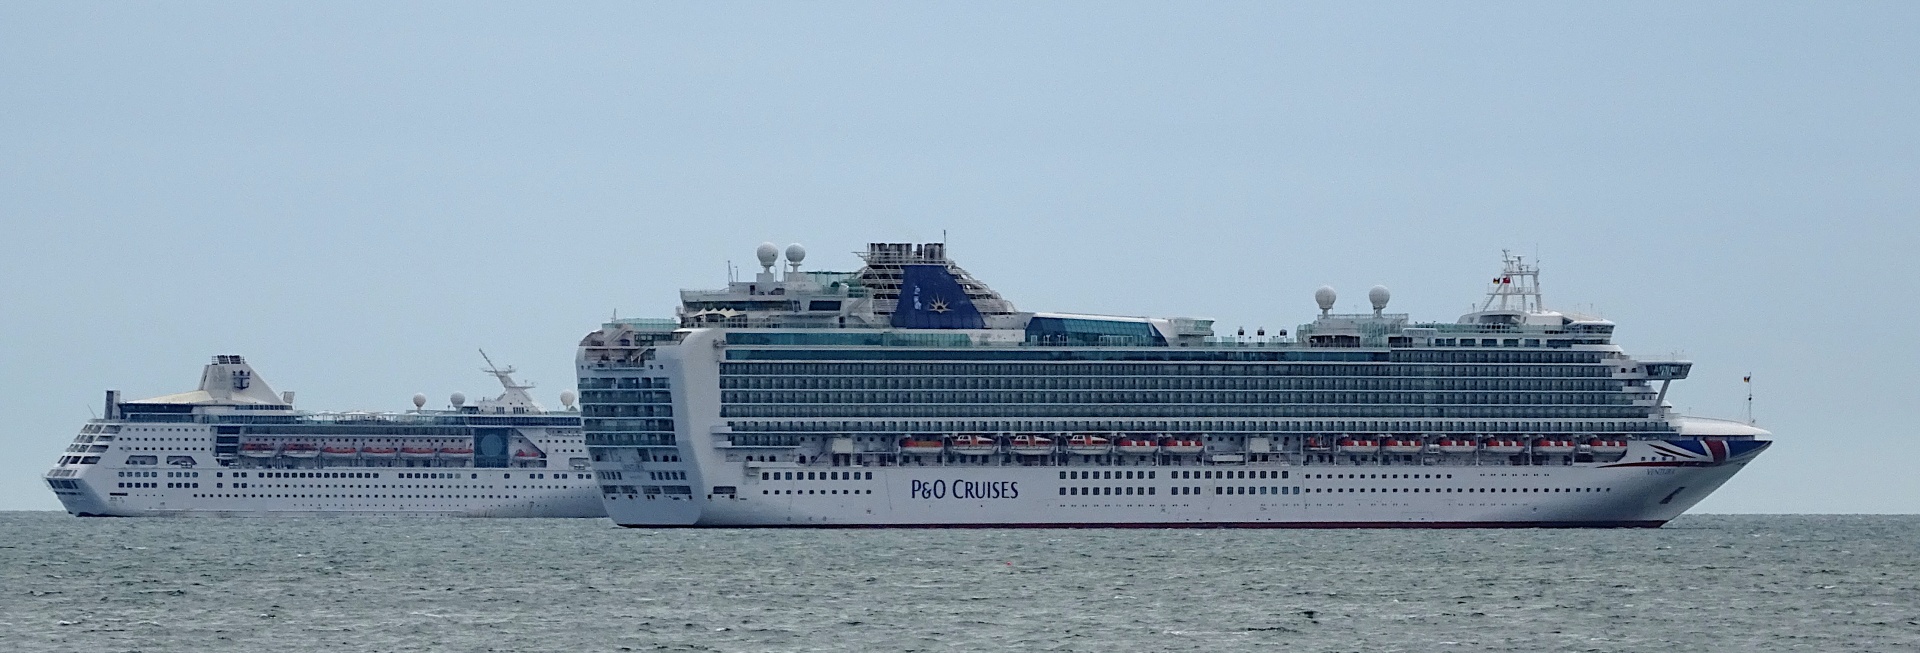 Two Cruise Ships At Sea